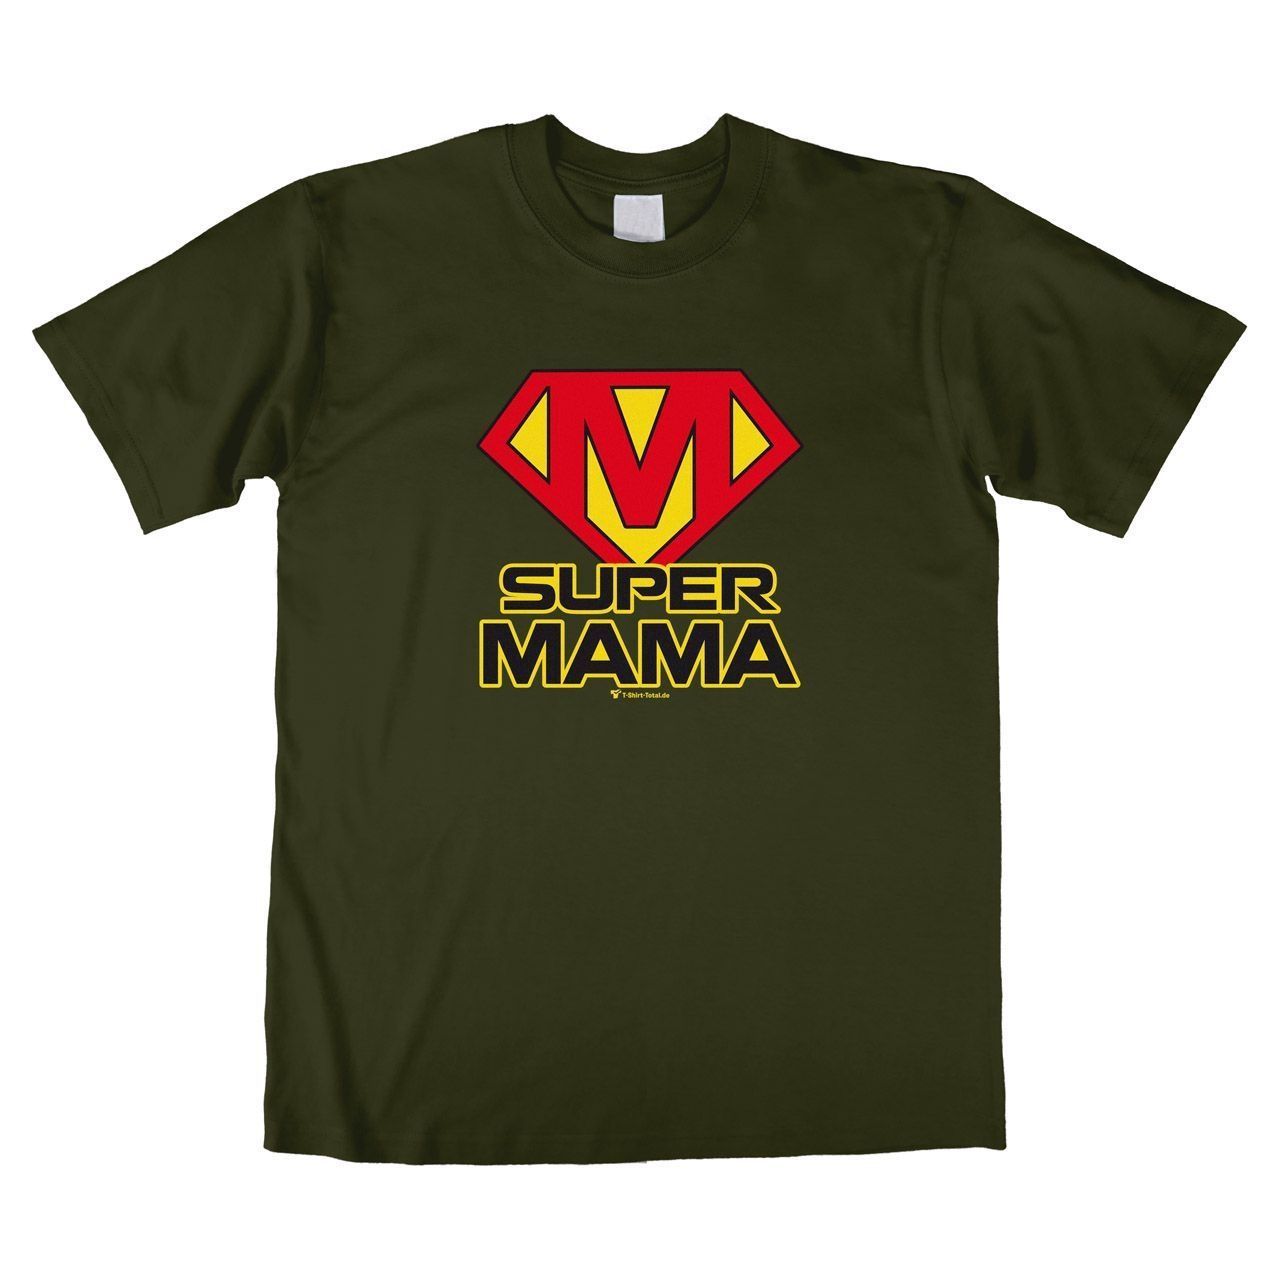 Super Mama Unisex T-Shirt khaki Small